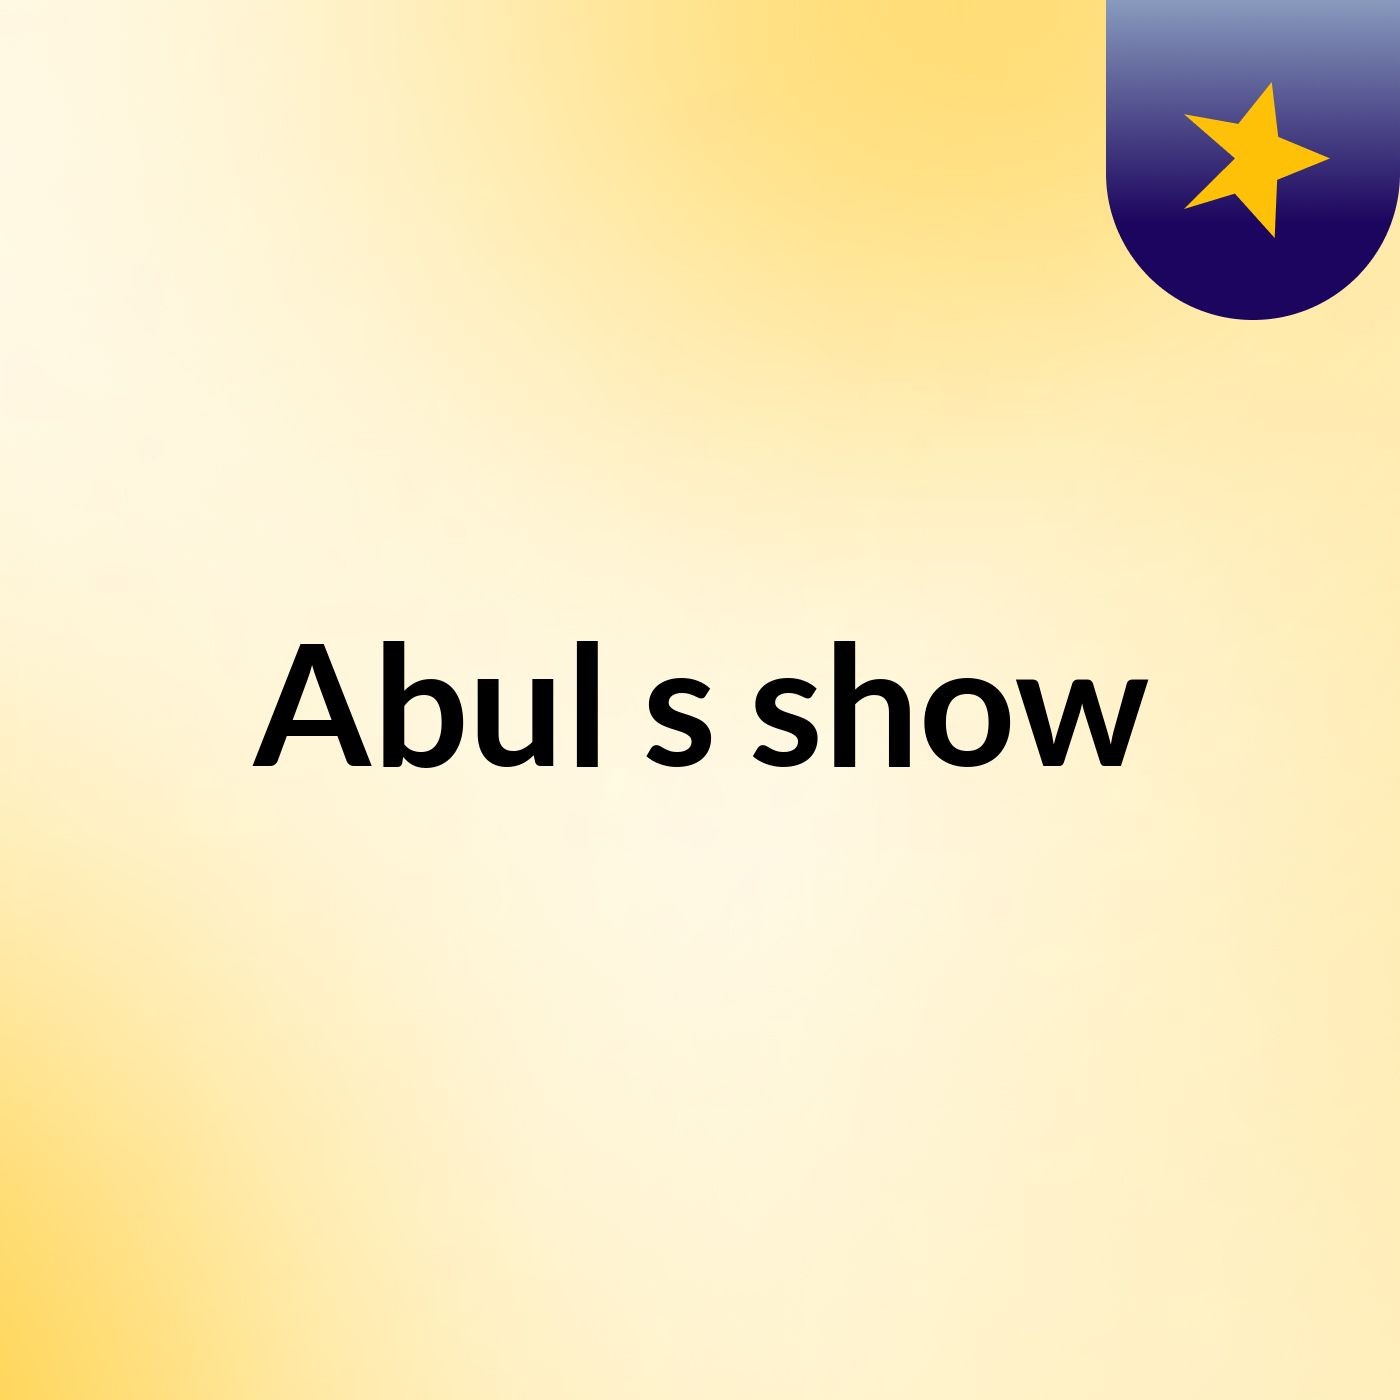 Abul's show